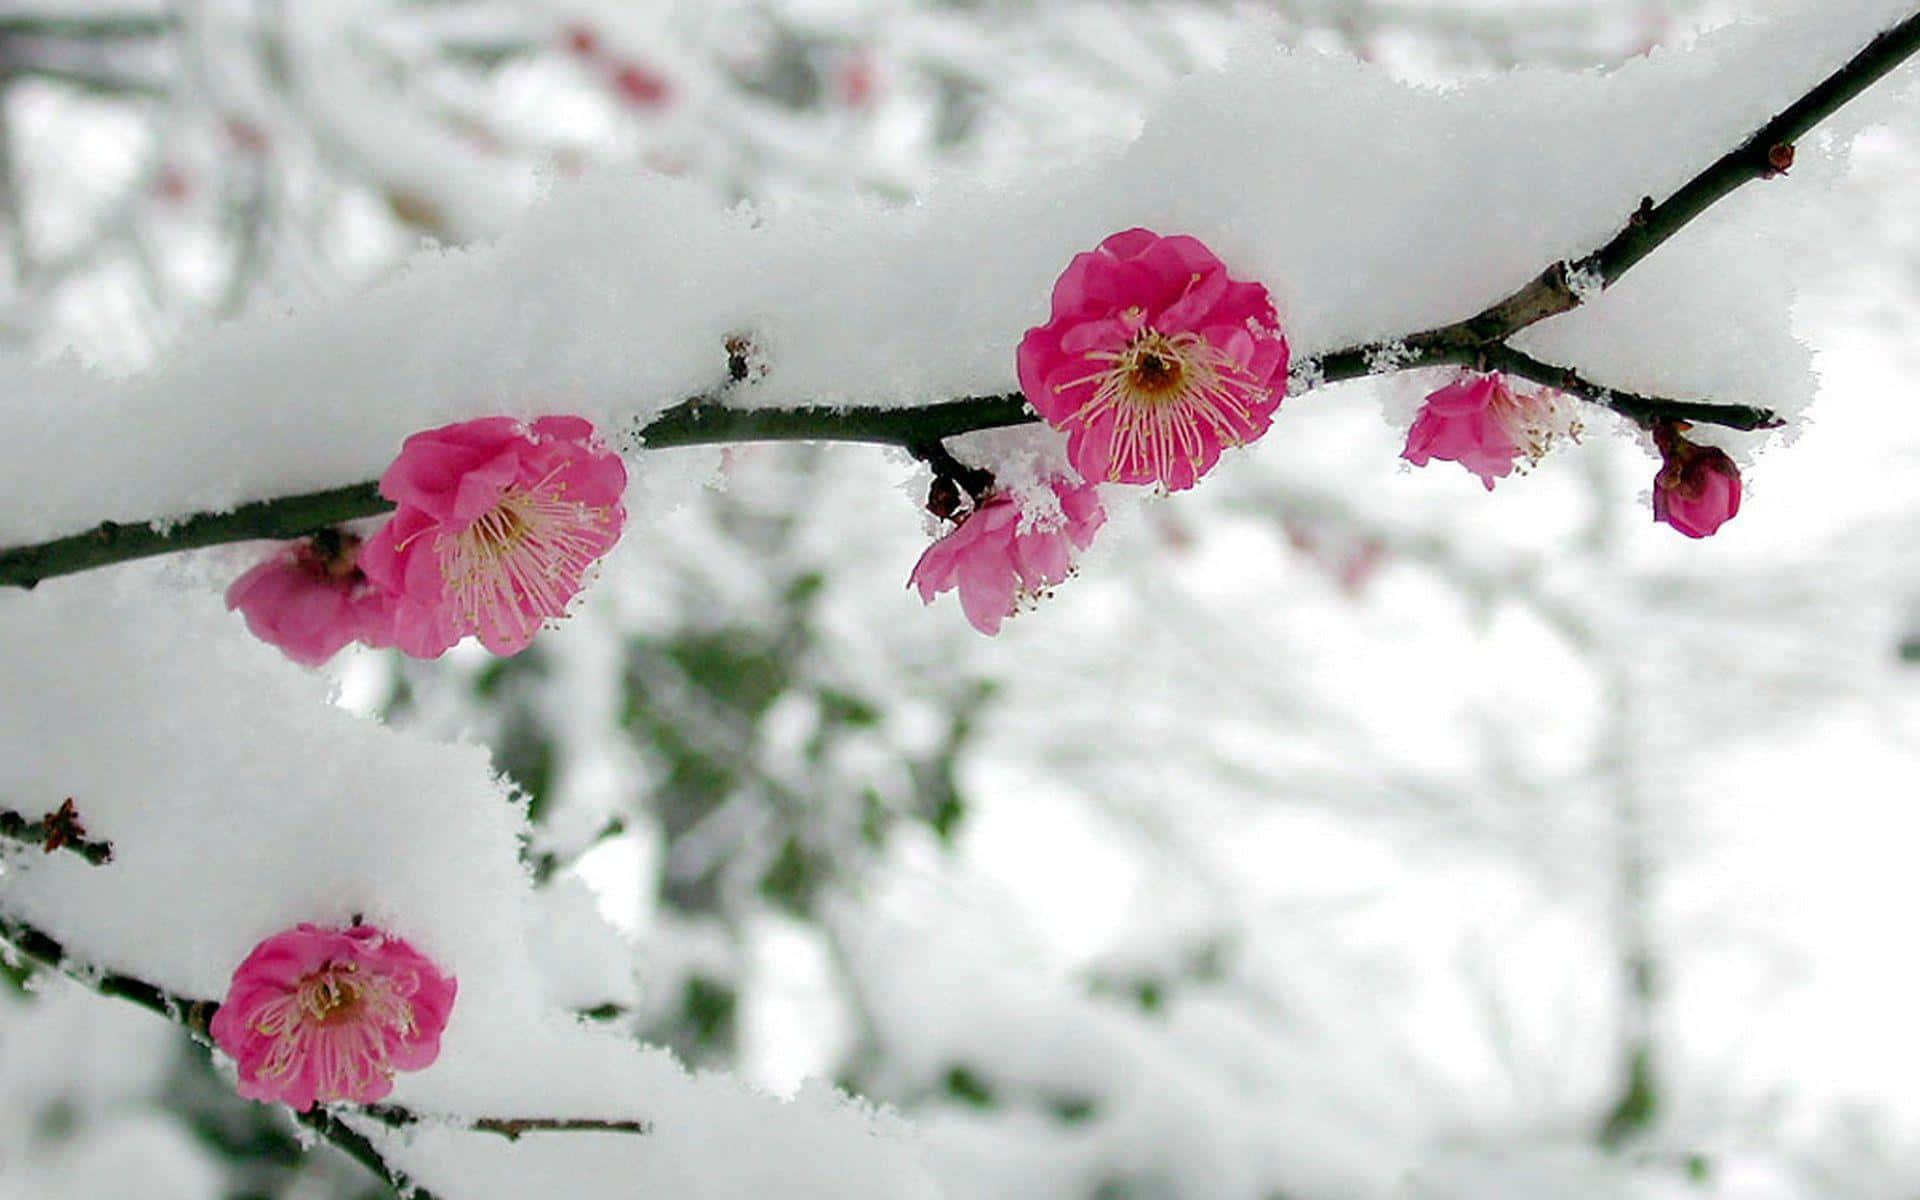 Enchanting Winter Flowers in Full Bloom Wallpaper